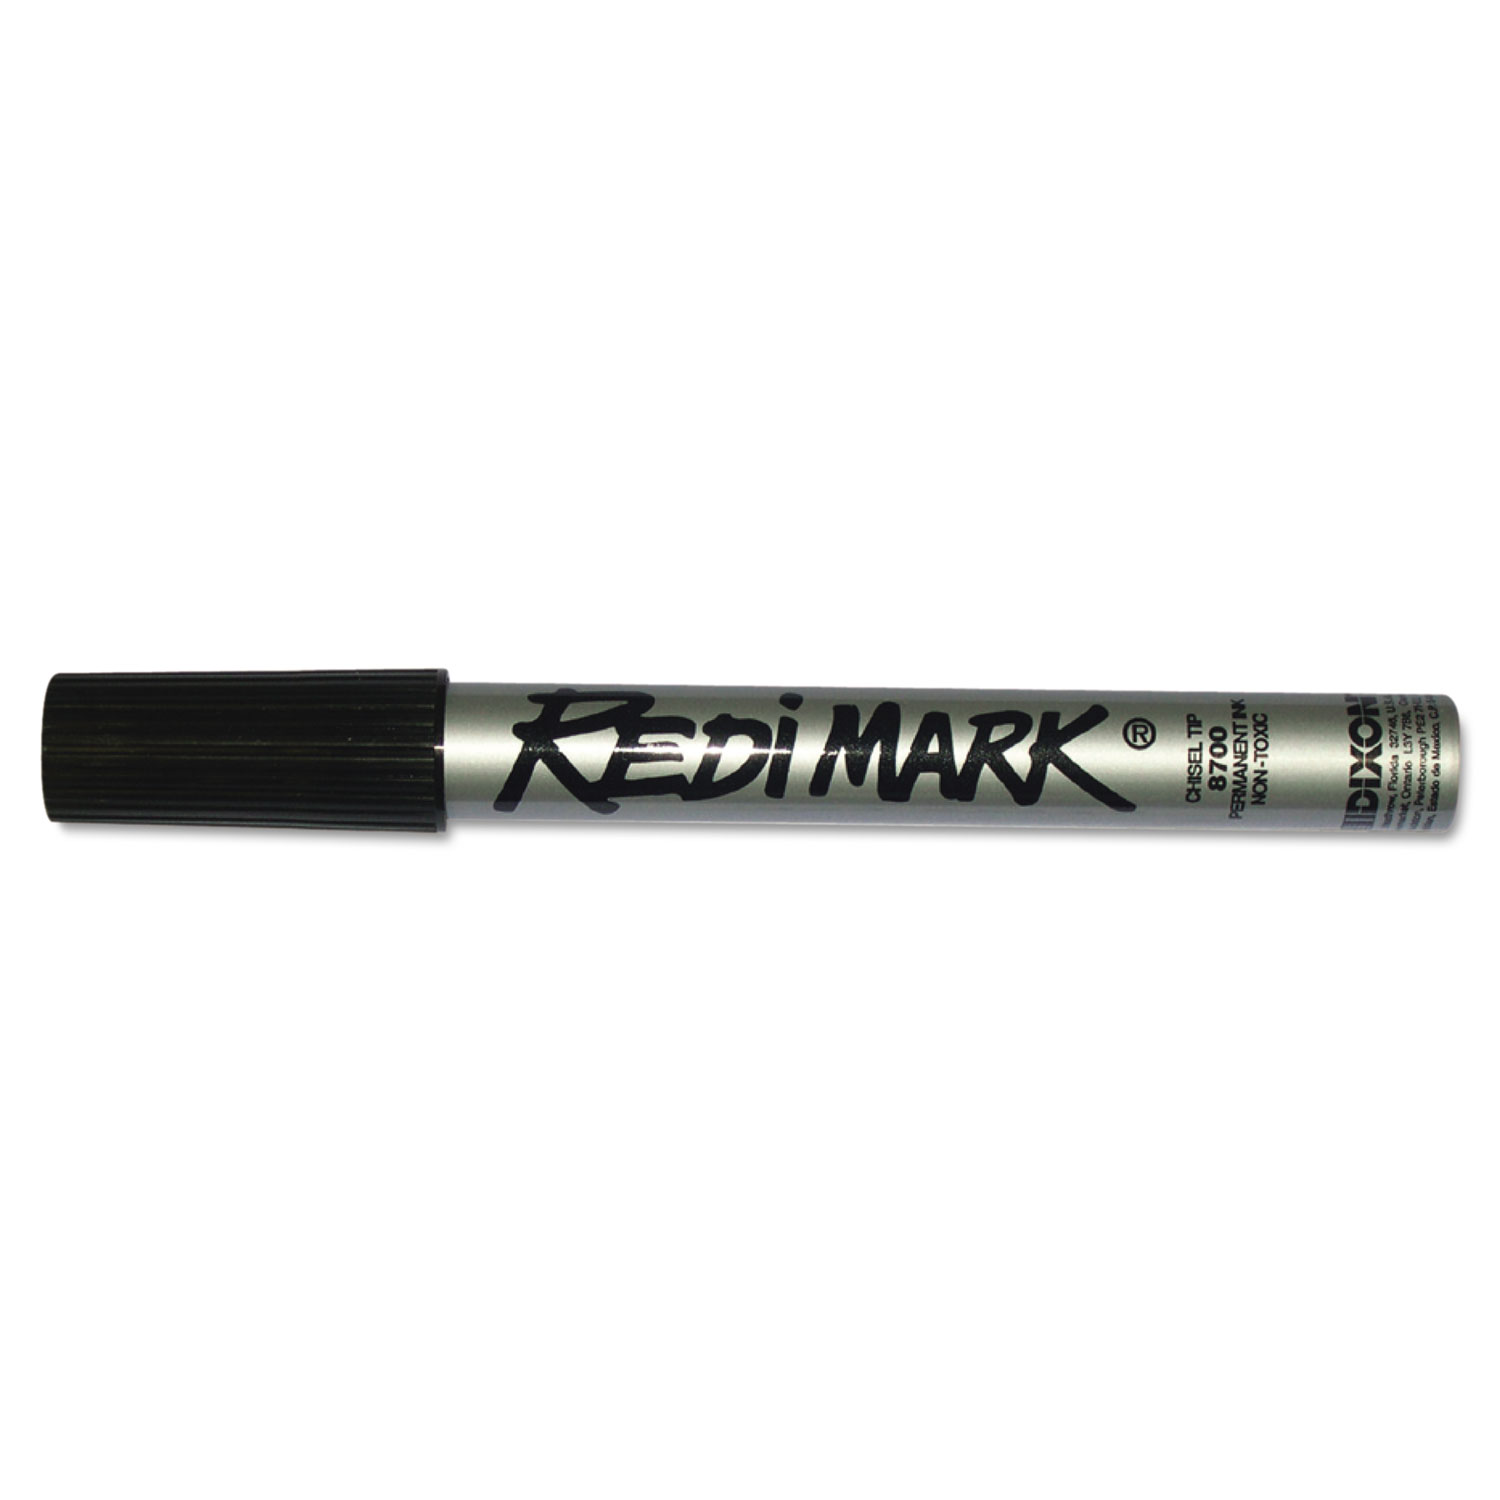  Dixon 87170 Redimark Metal-Cased Marker, Broad Chisel Tip, Black, Dozen (DIX87170) 